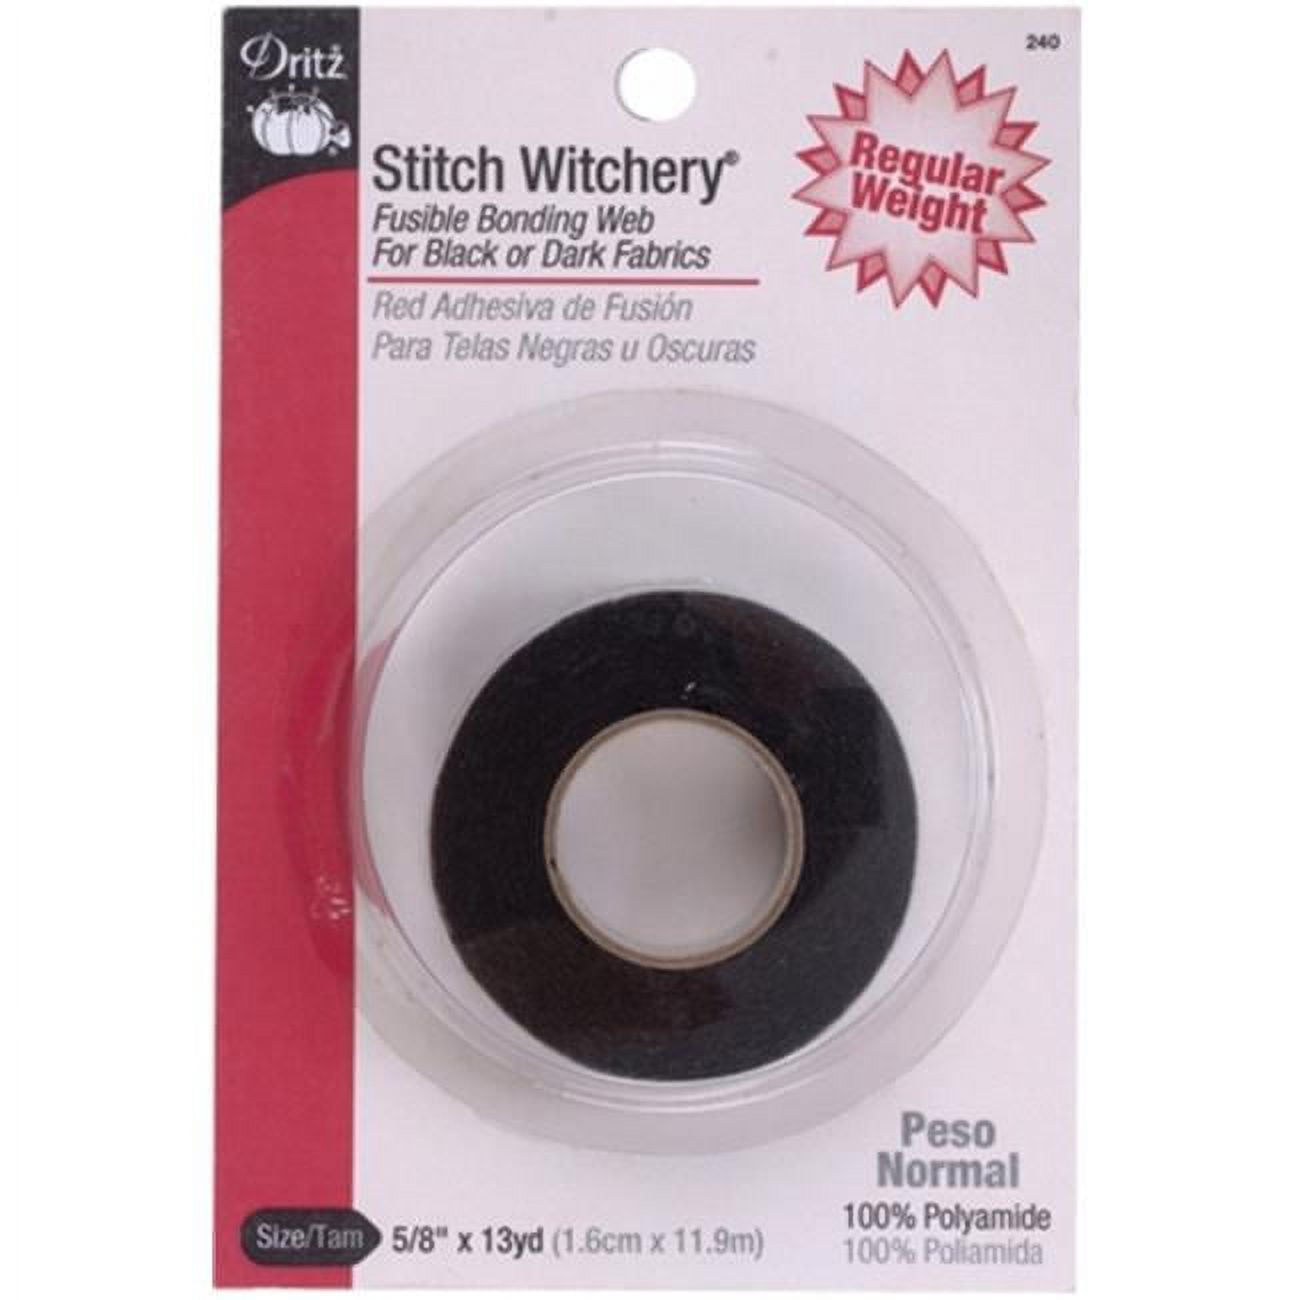 Stitch Witchery Tape (5/8 x 20yds), Regular Weight, Dritz